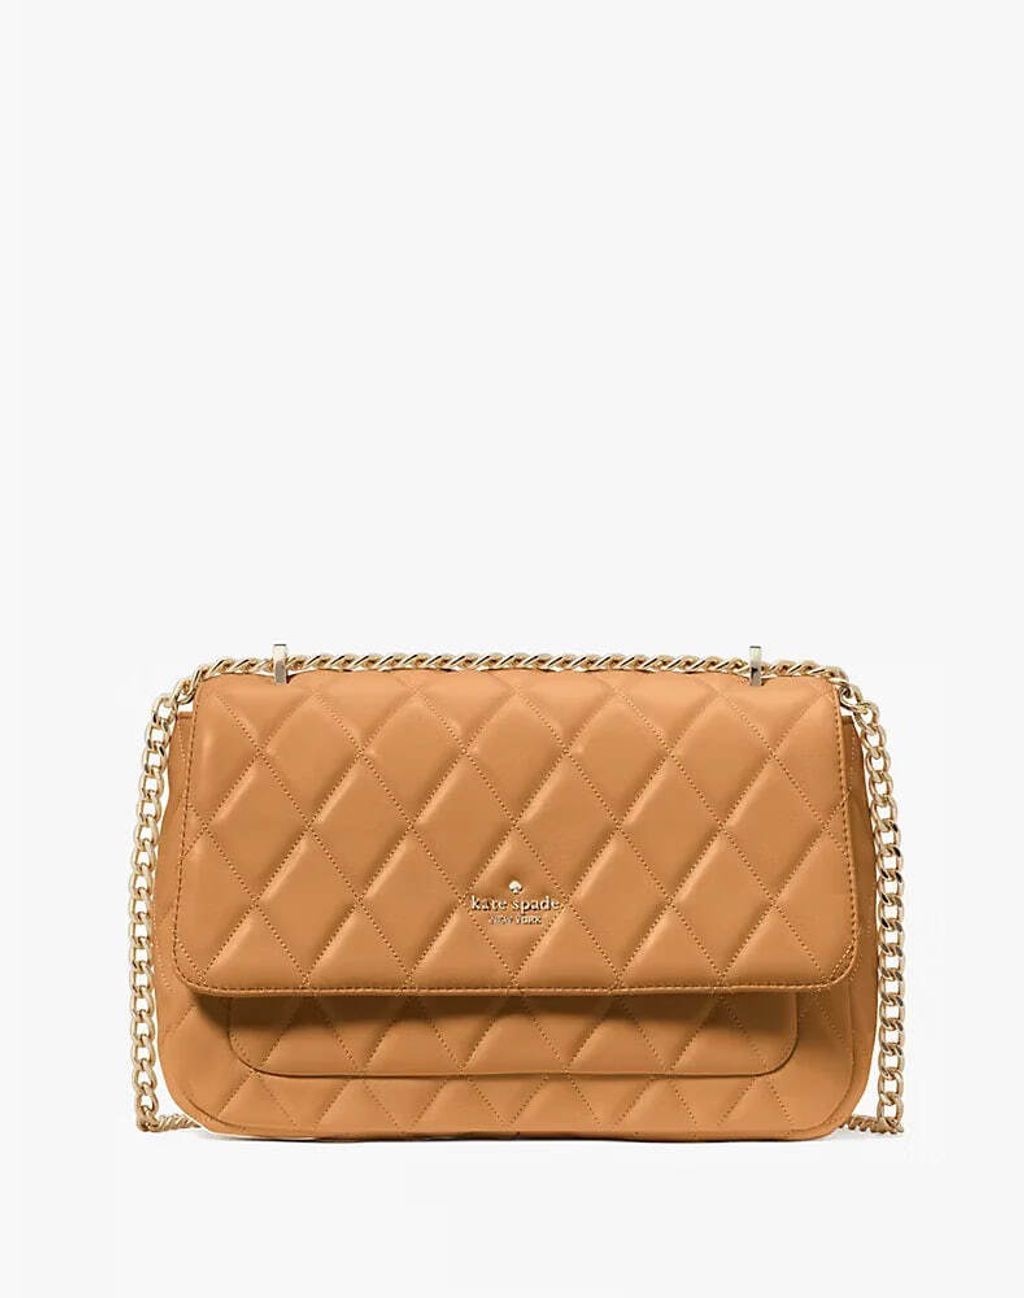 handbagbranded.com getlush outlet personalshopper usa Coach malaysia ready stock Kate Spade Carey Medium Flap Shoulder Bag in Tiramisu